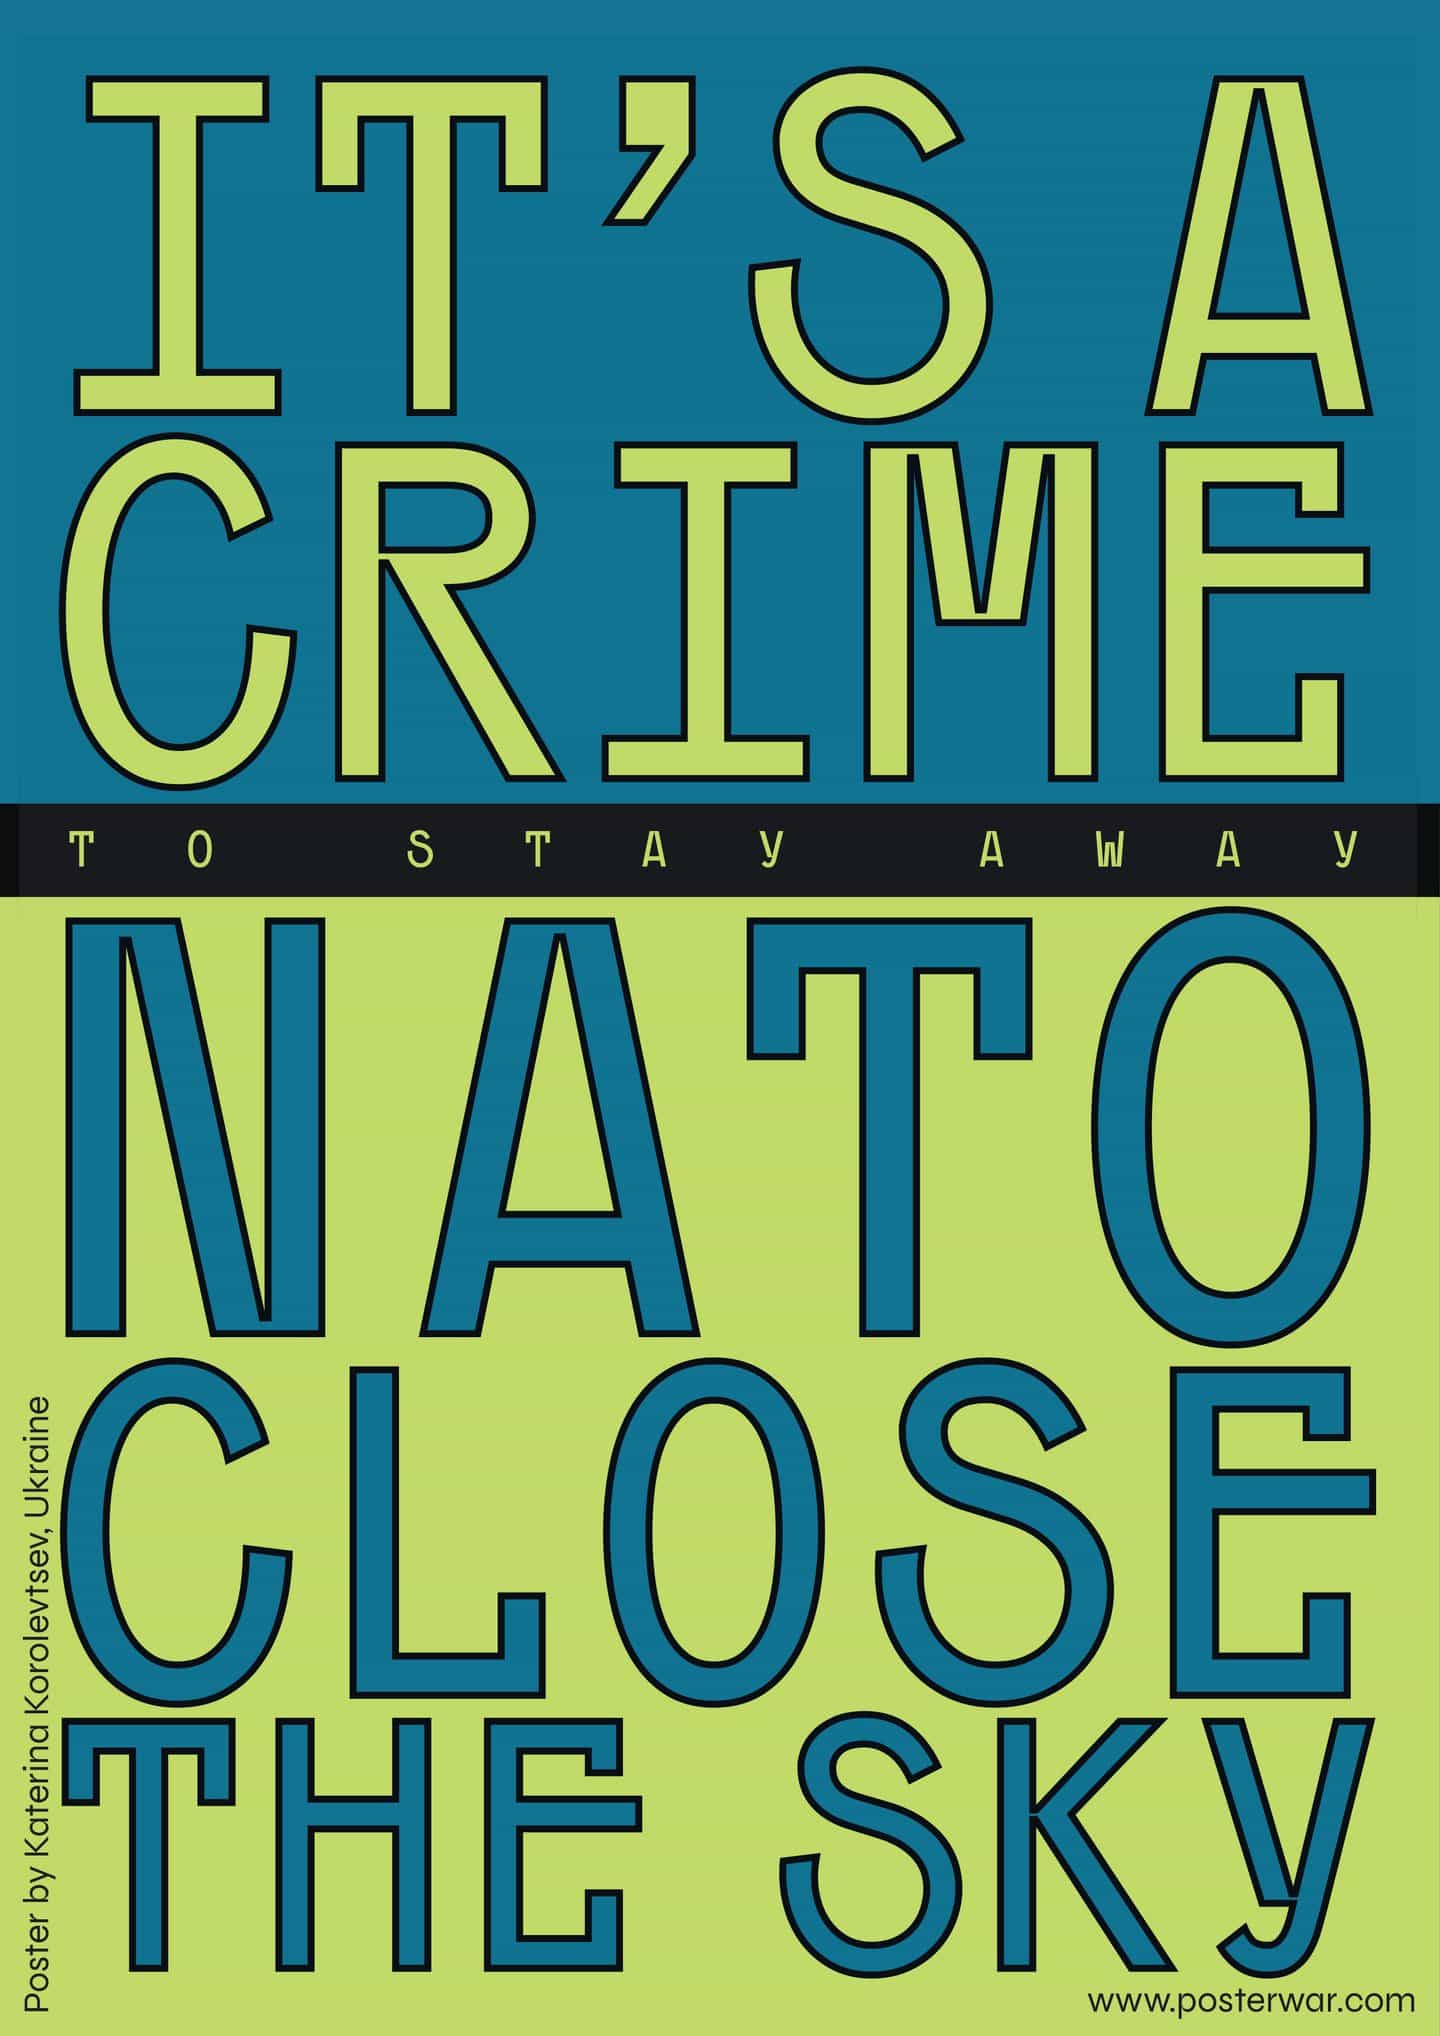 Posterwar apoya a Ucrania con un archivo descargable de 80 carteles y contando